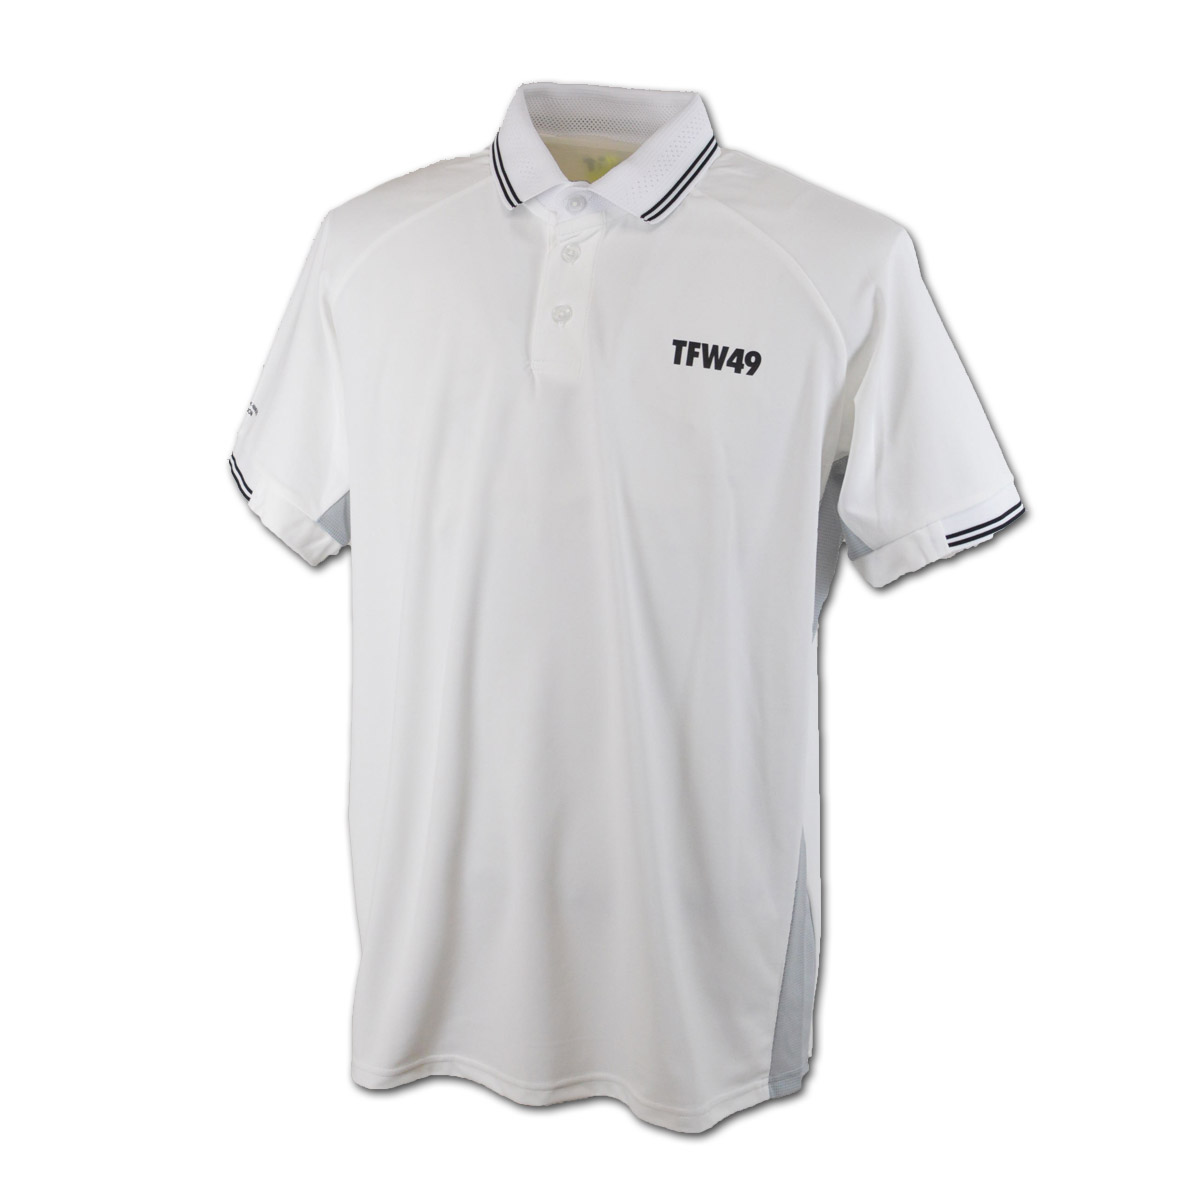 TFW49 半袖ポロシャツ メンズ 春夏用 白 チャコールグレー M L LL t102410026